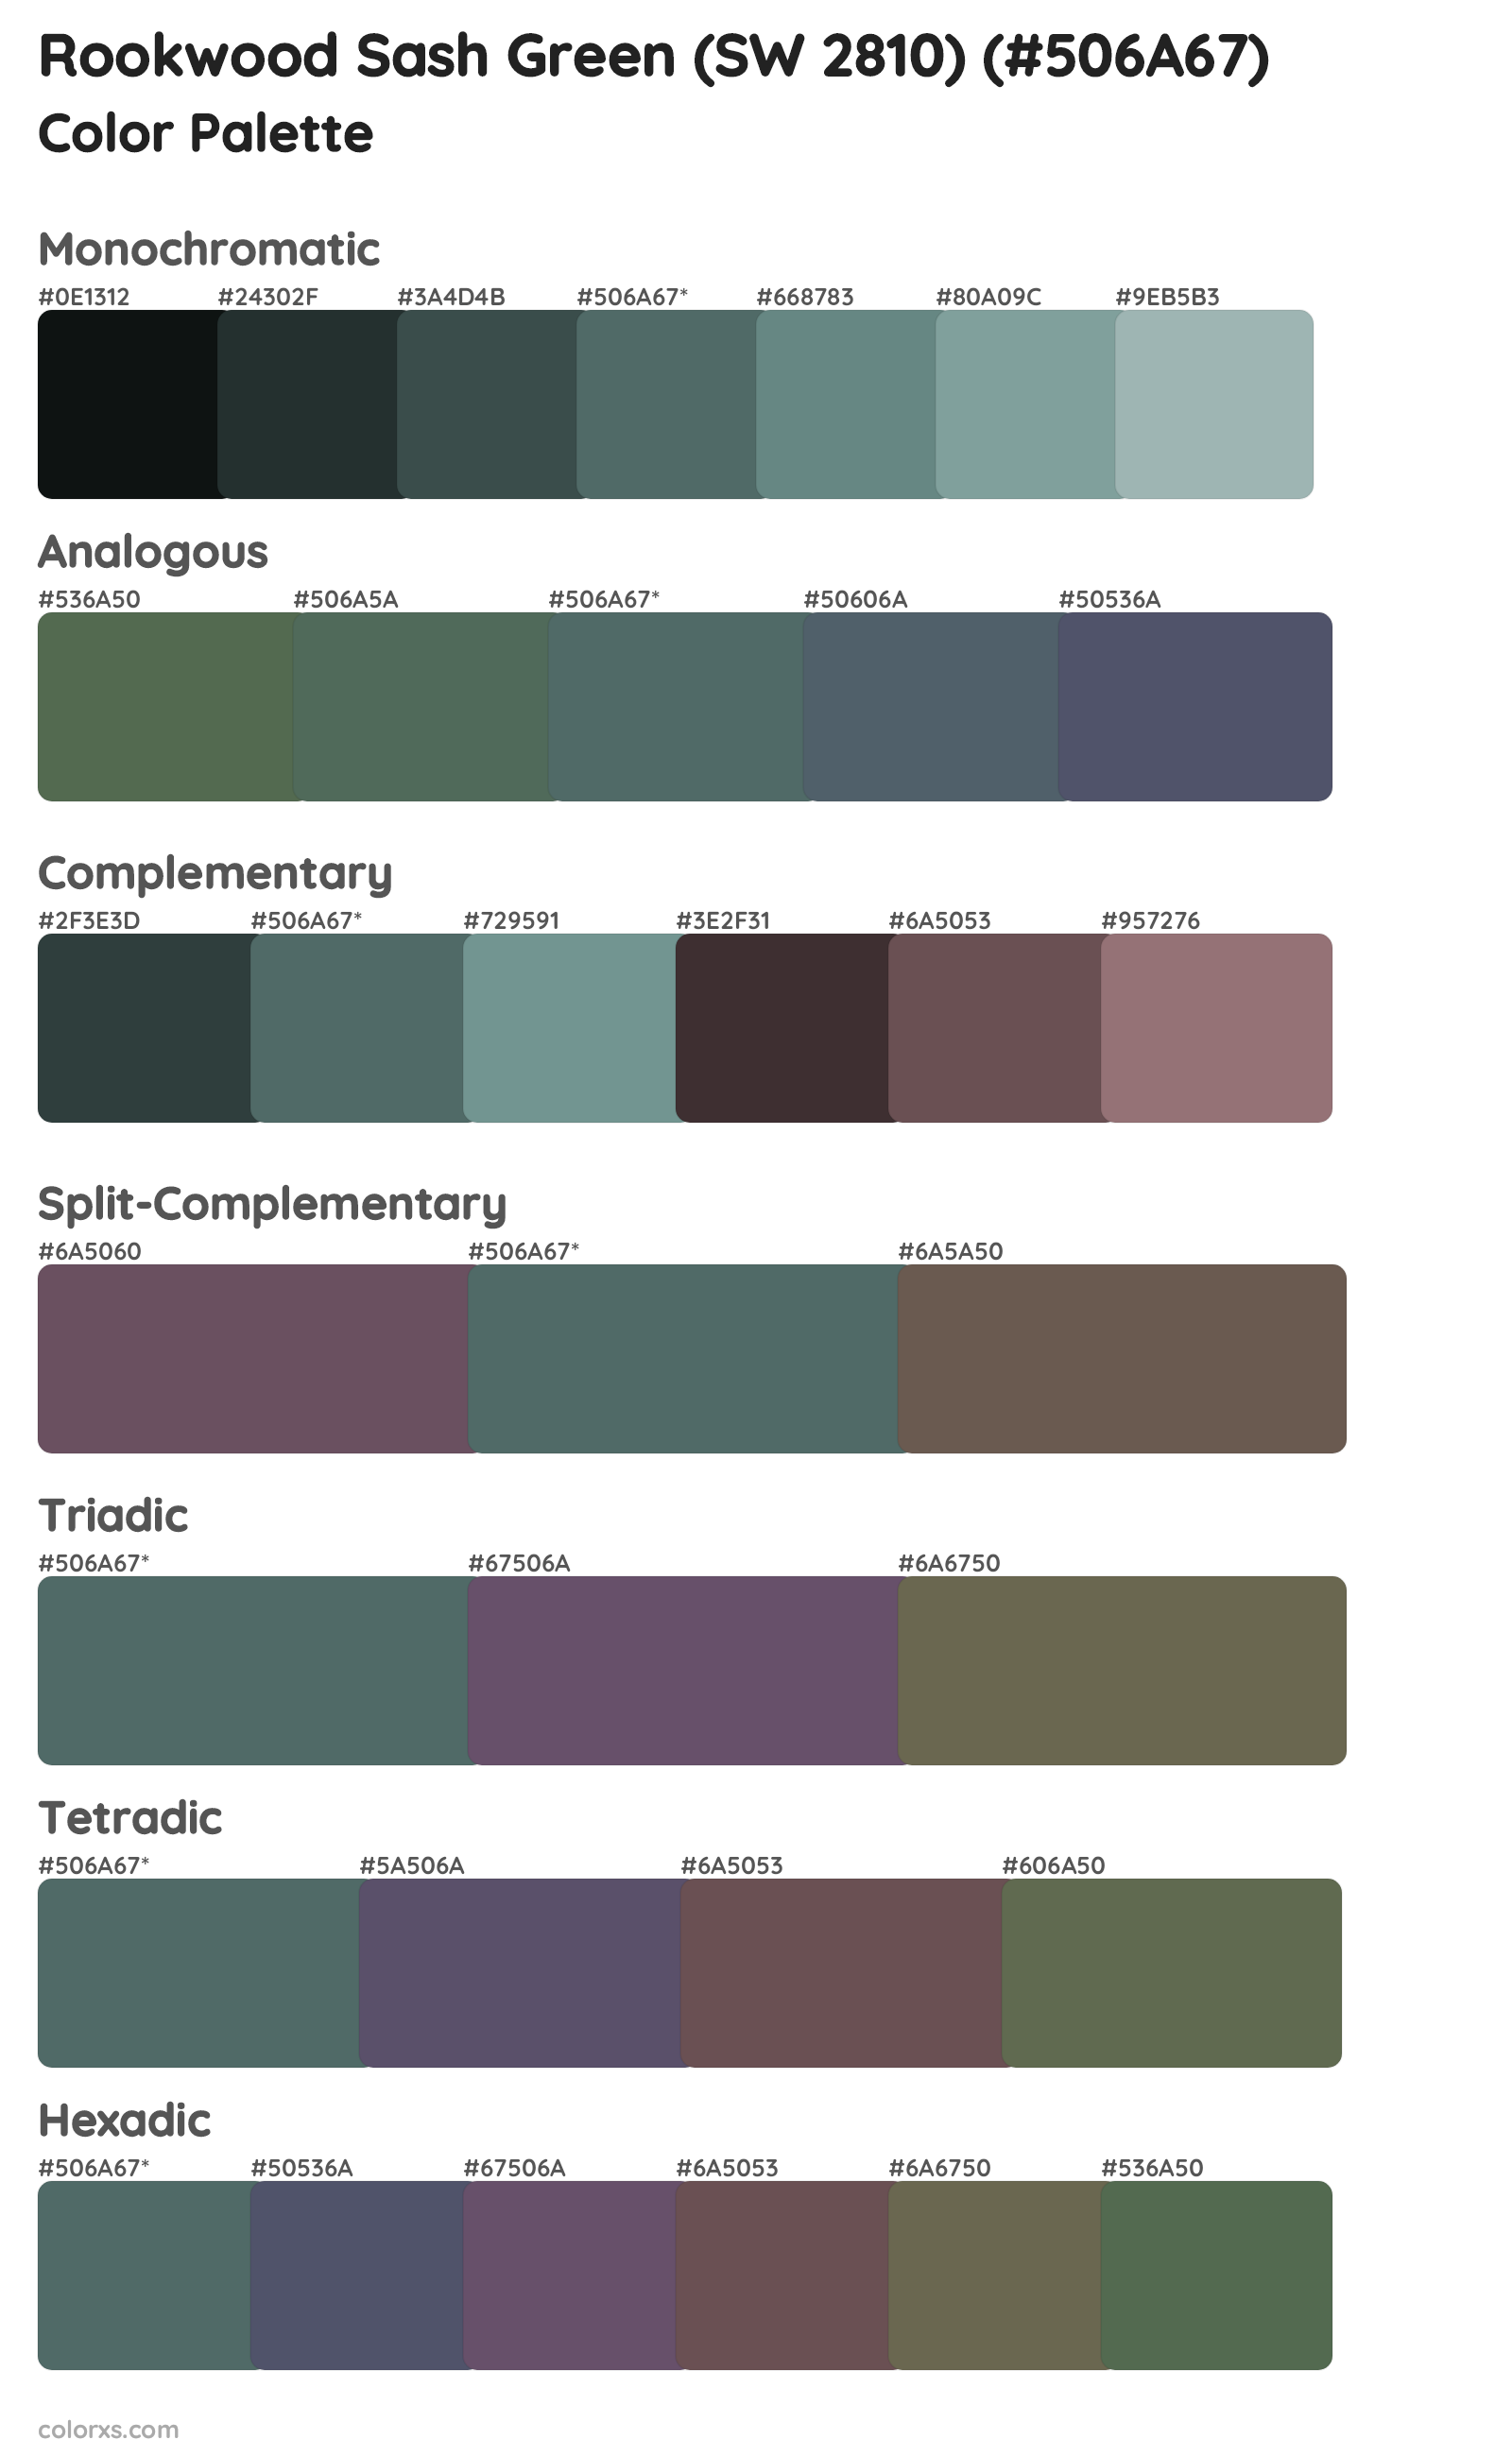 Rookwood Sash Green (SW 2810) Color Scheme Palettes